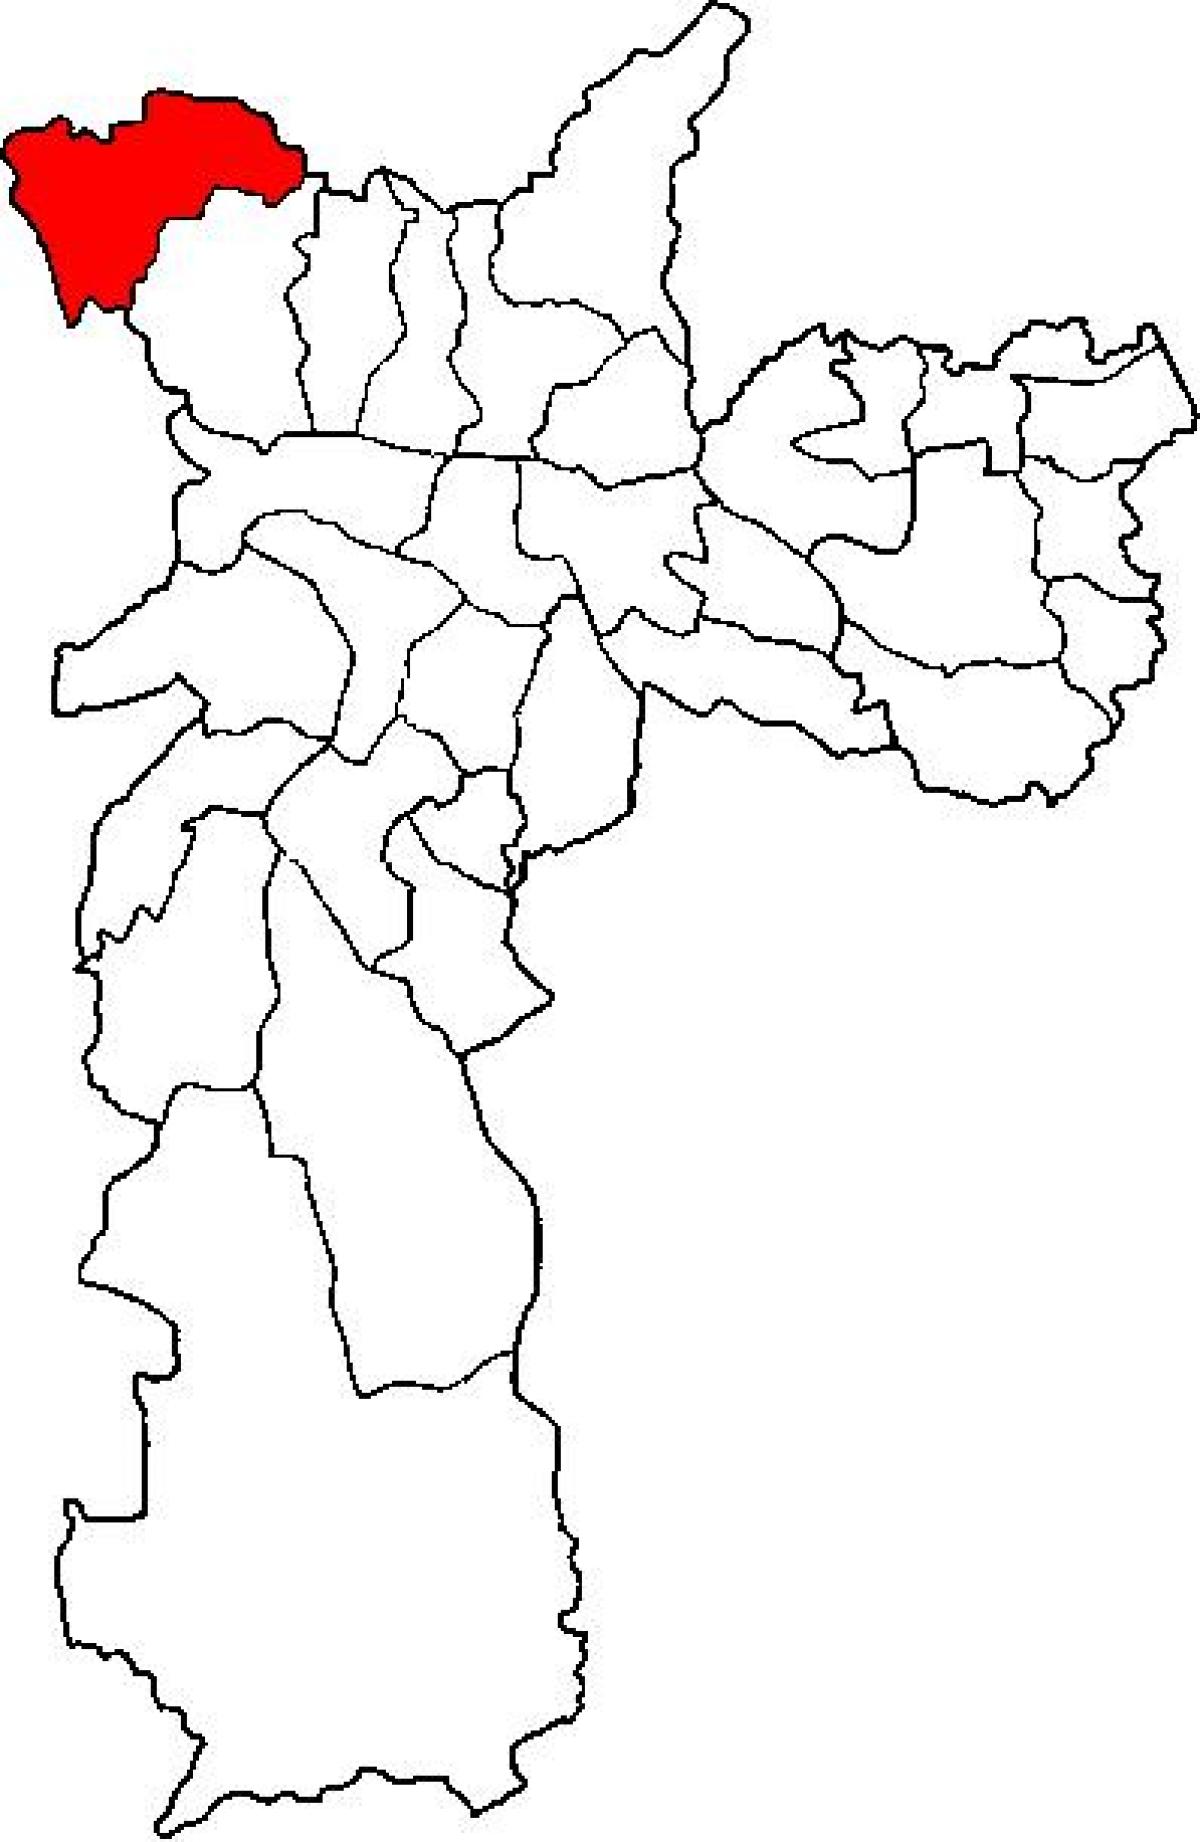 Kort over Perus sub-præfekturet São Paulo